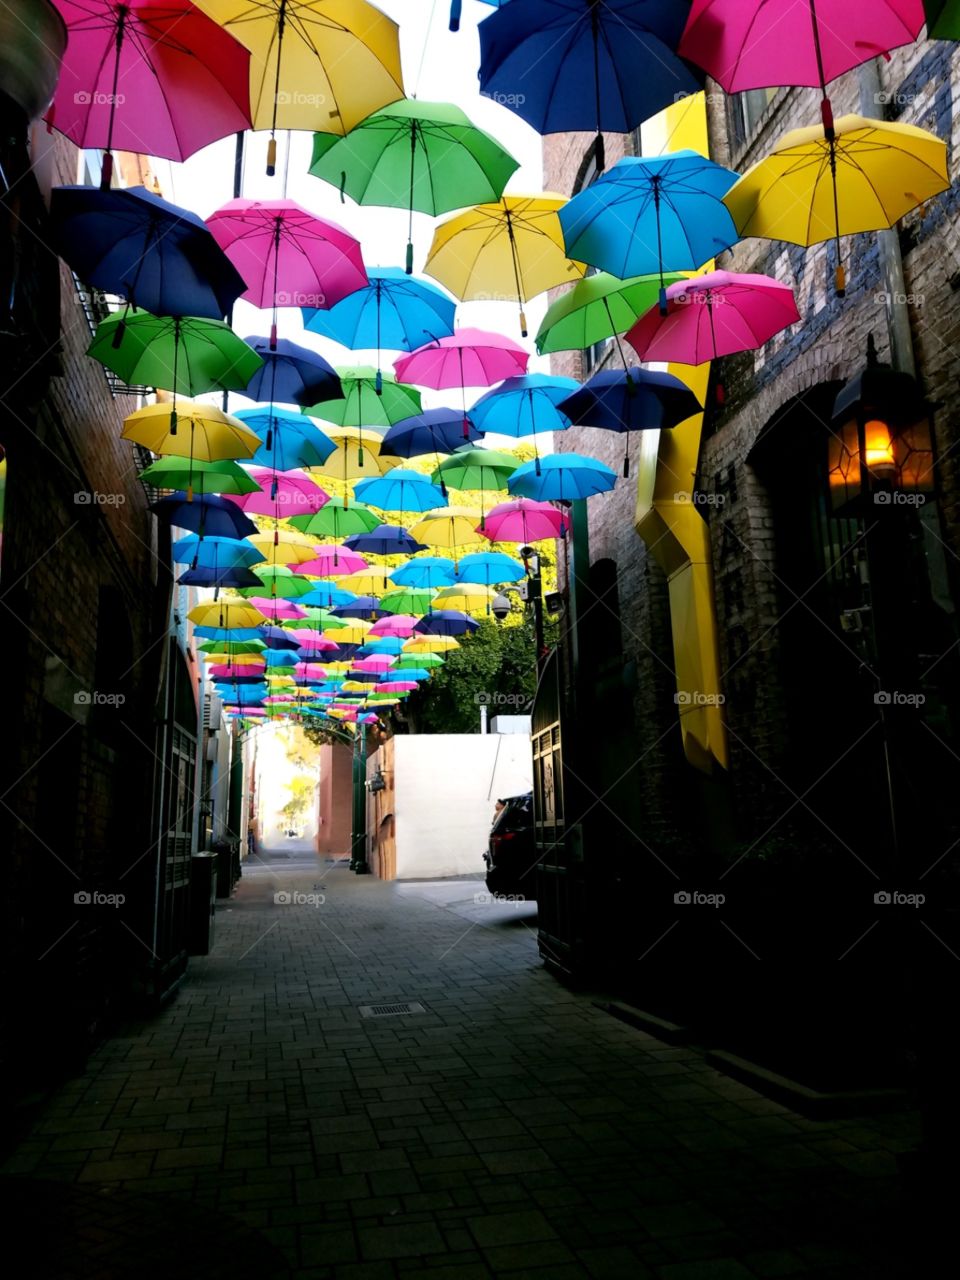 umbrellas in an alley